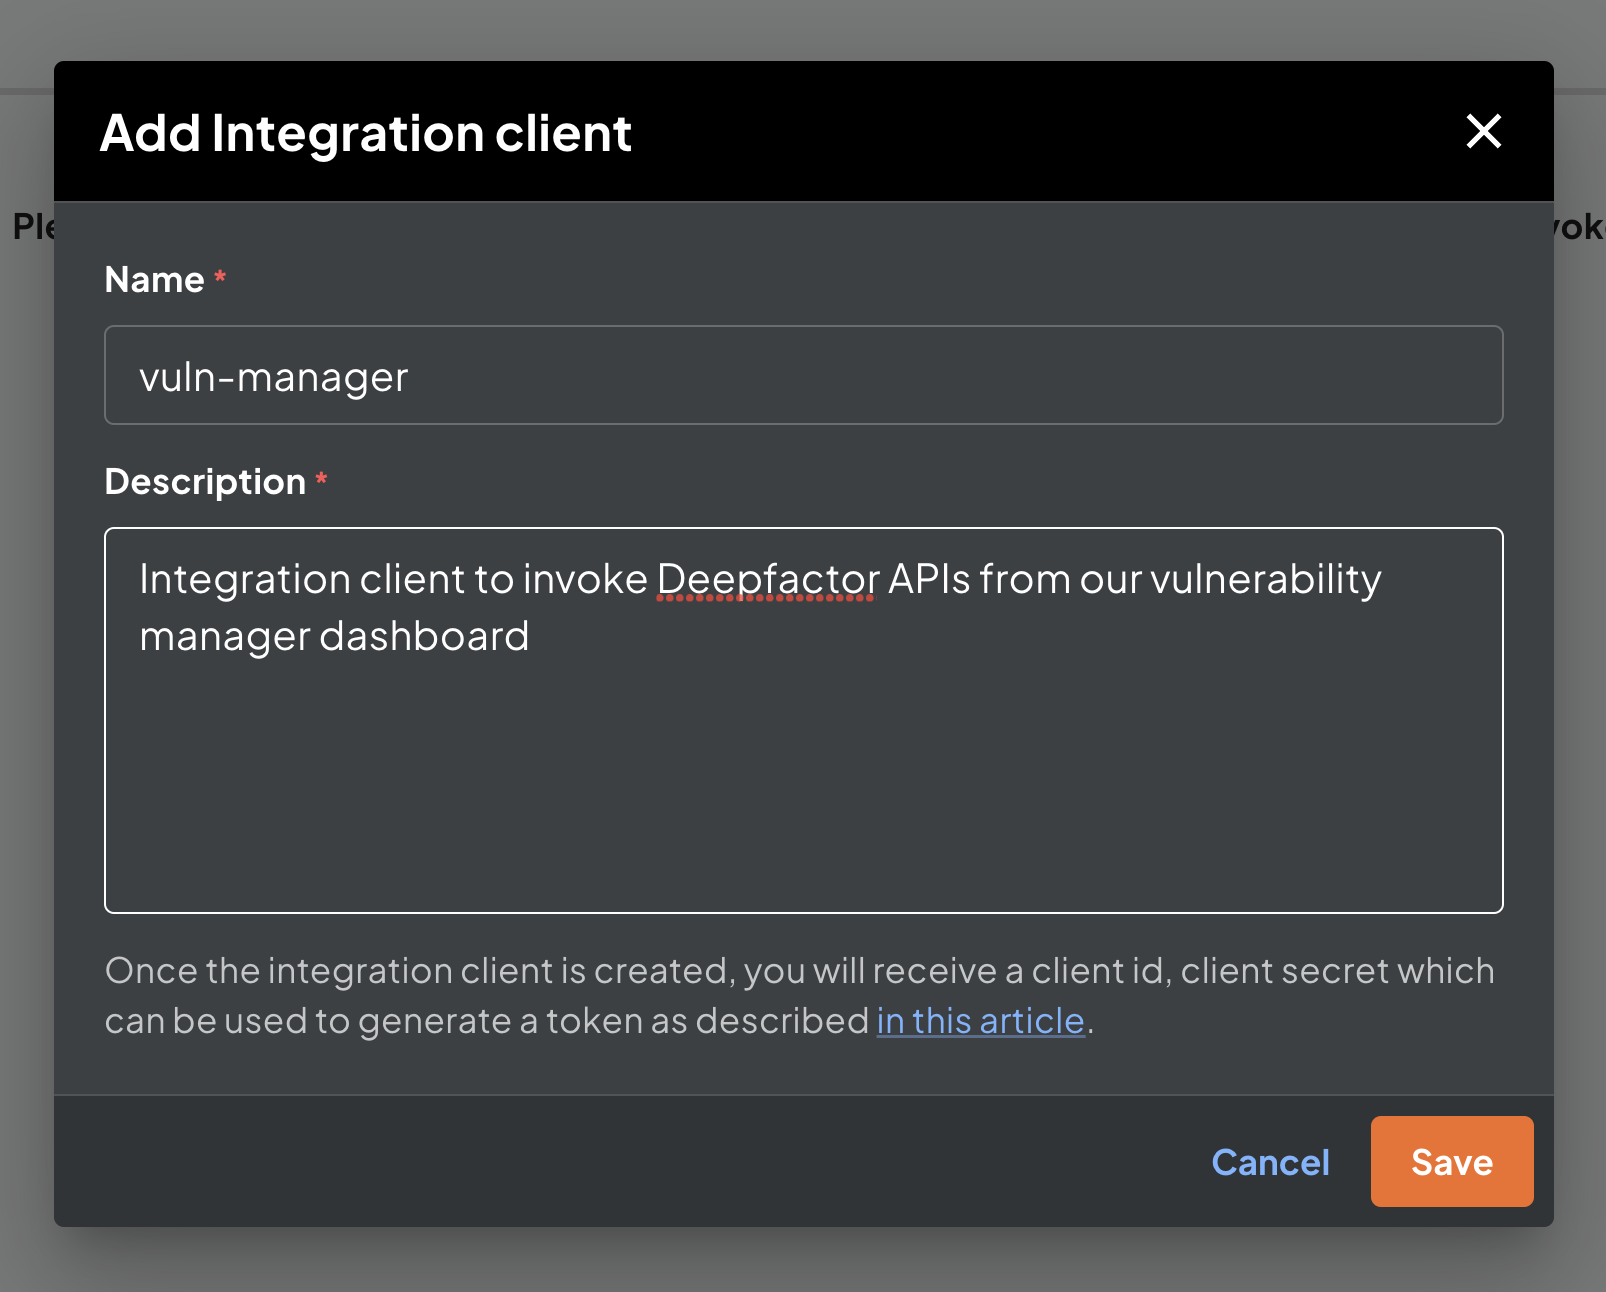 Add Integration Client Dialog